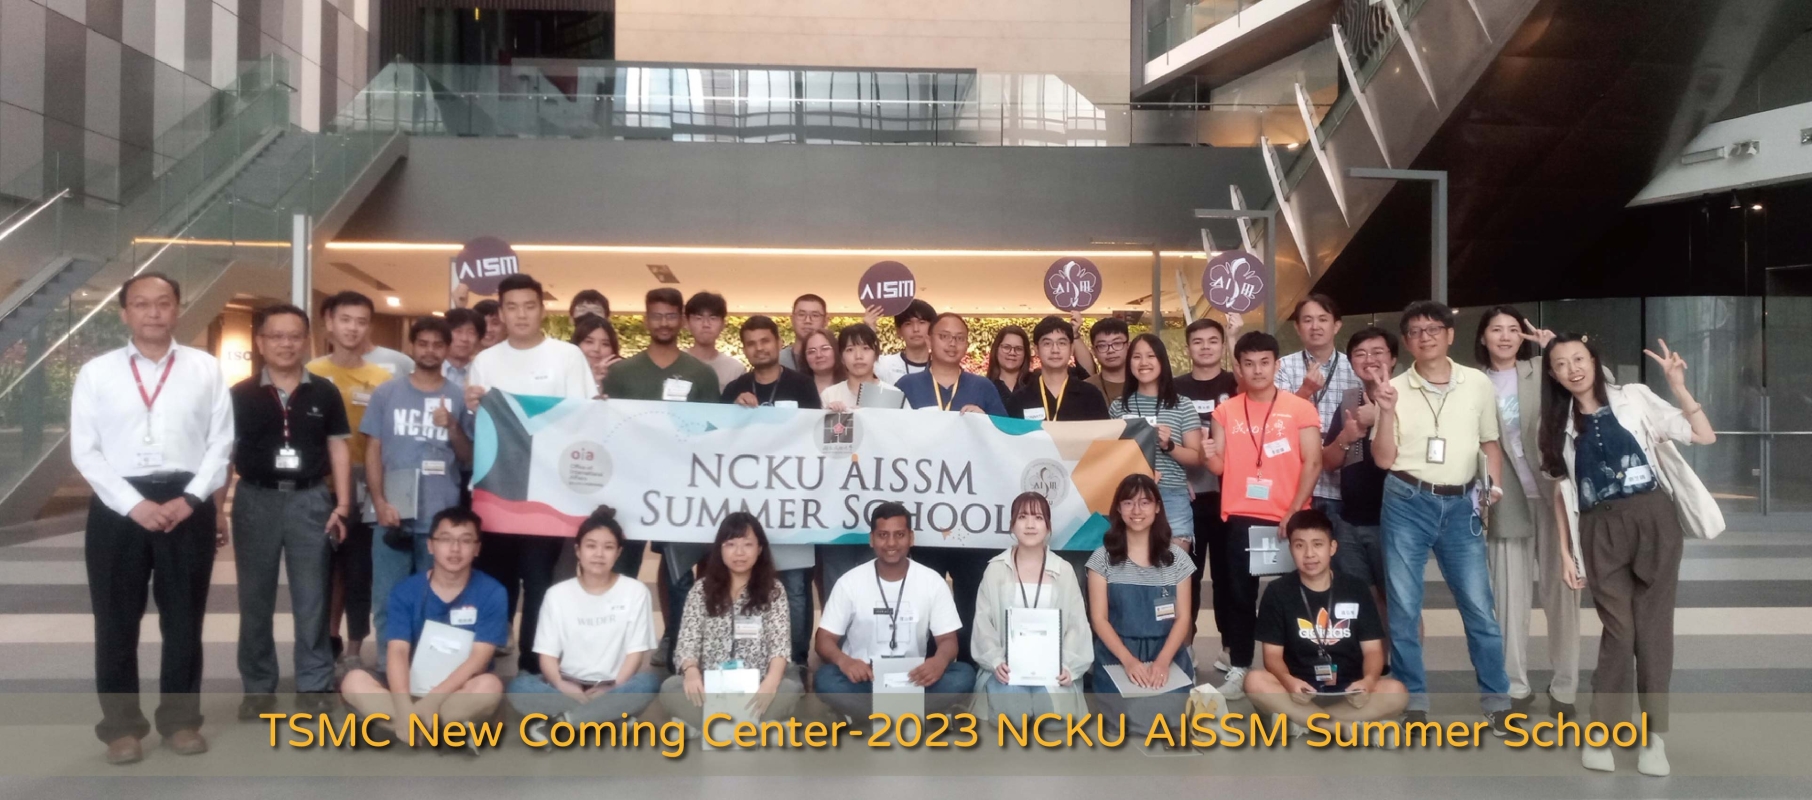 TSMC New Coming Center-2023 NCKU AISSM Summer School